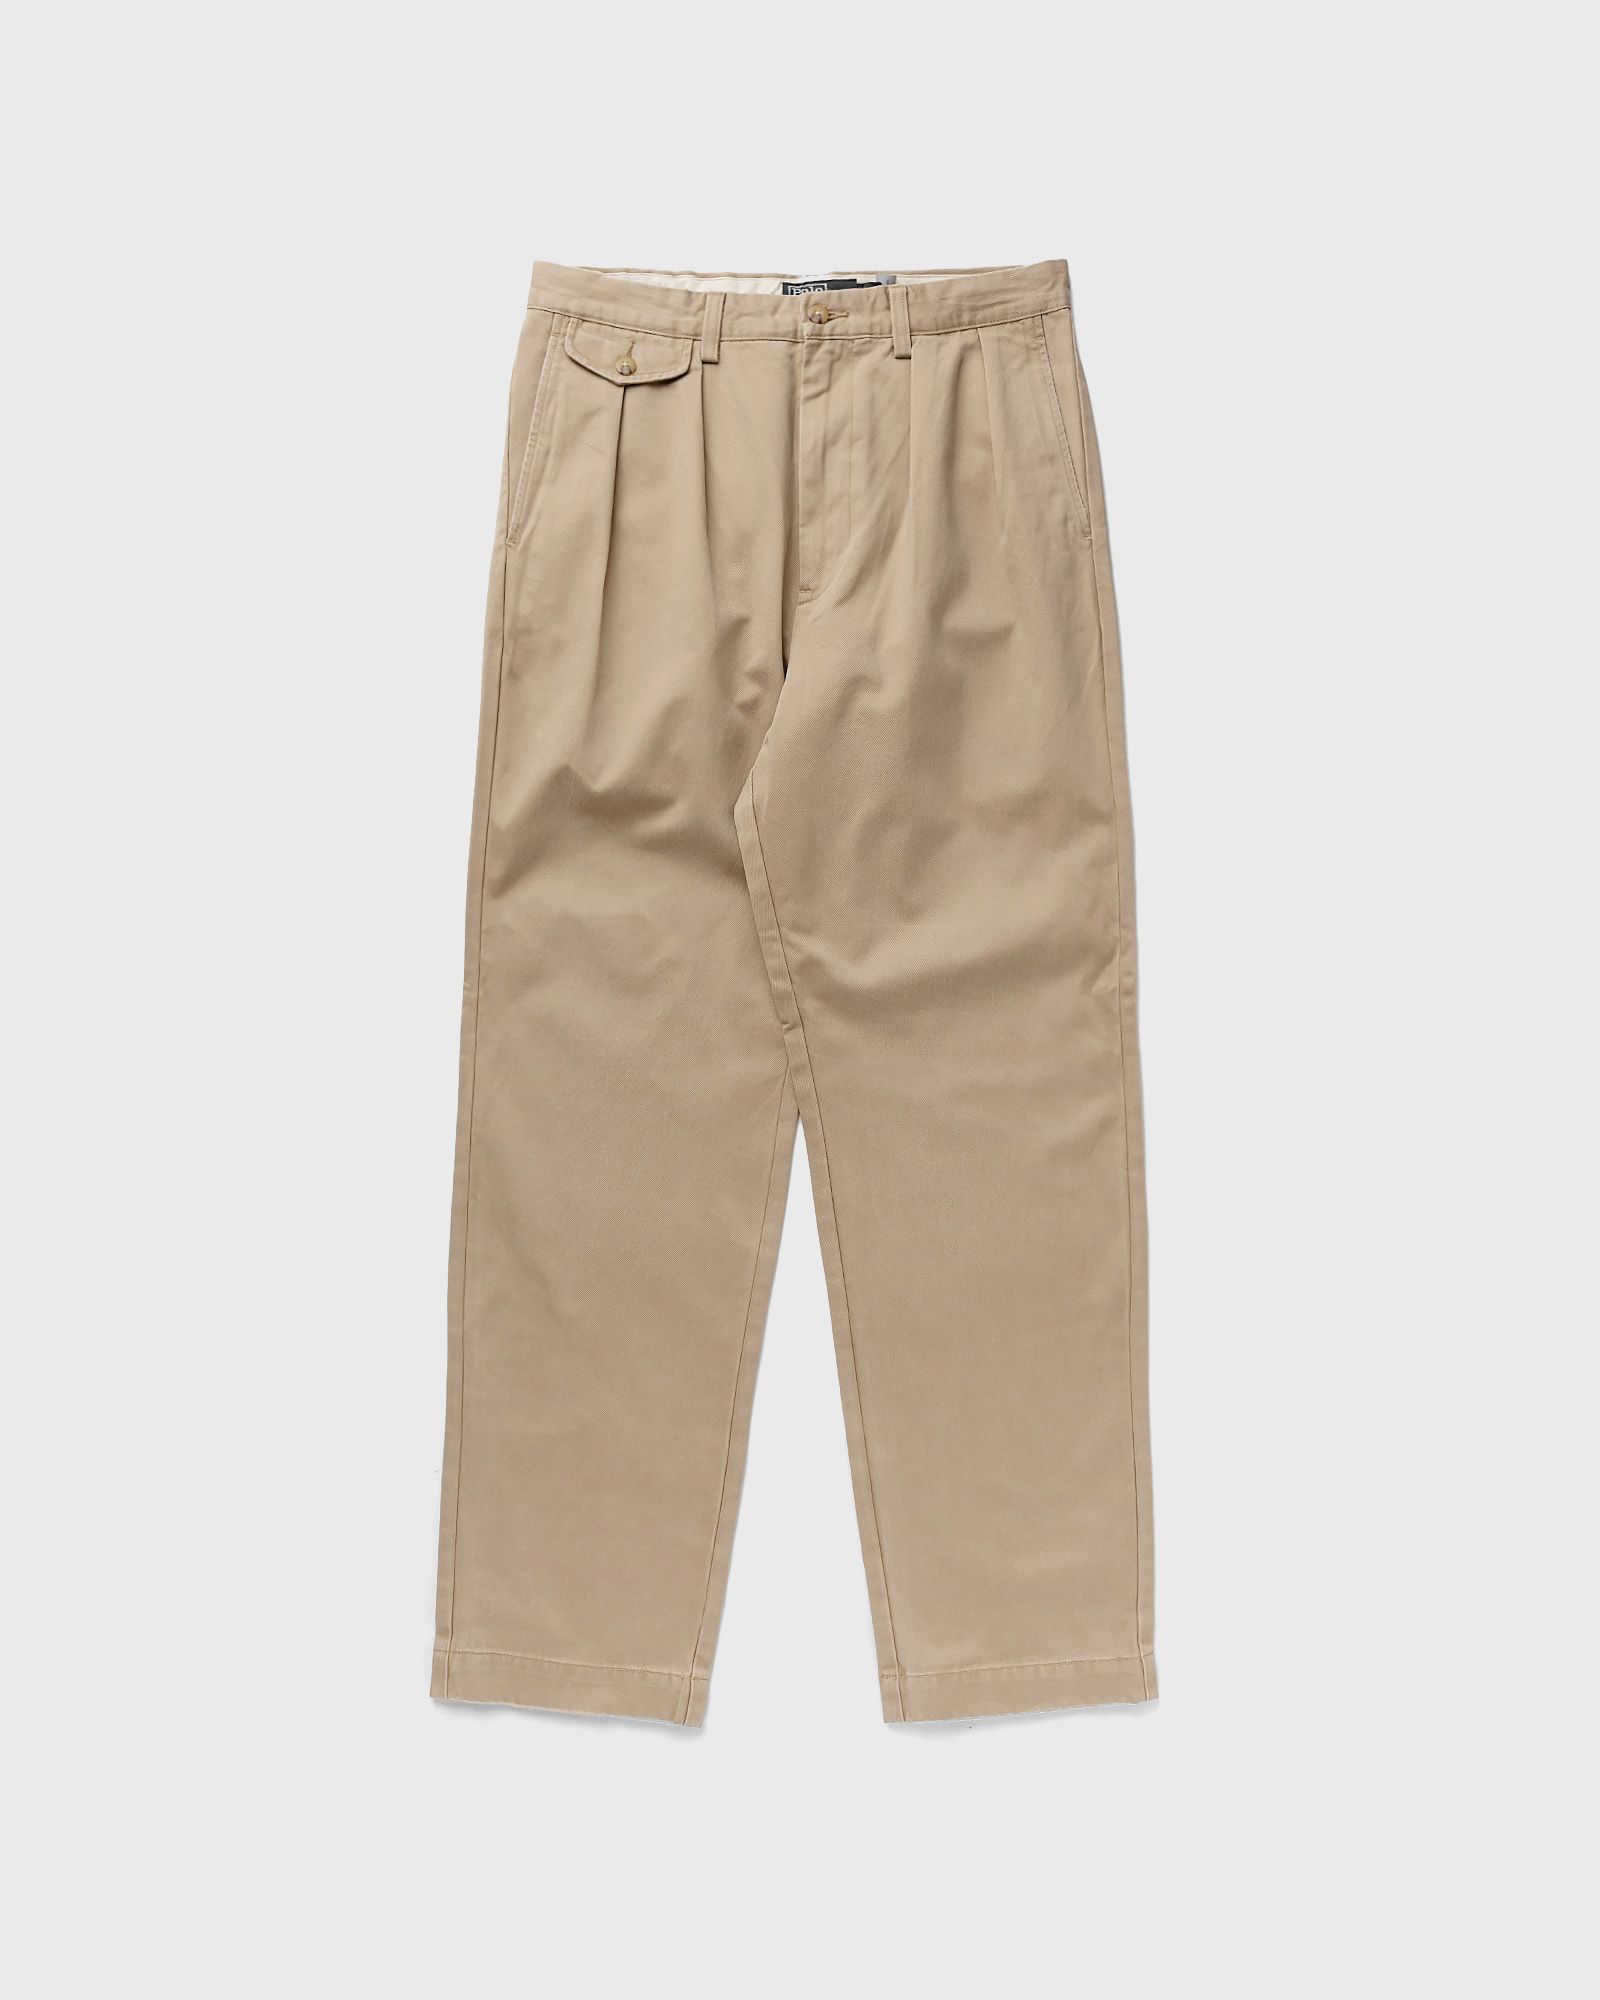 Polo Ralph Lauren - whitmanchino-pleated men casual pants brown in größe:xxl